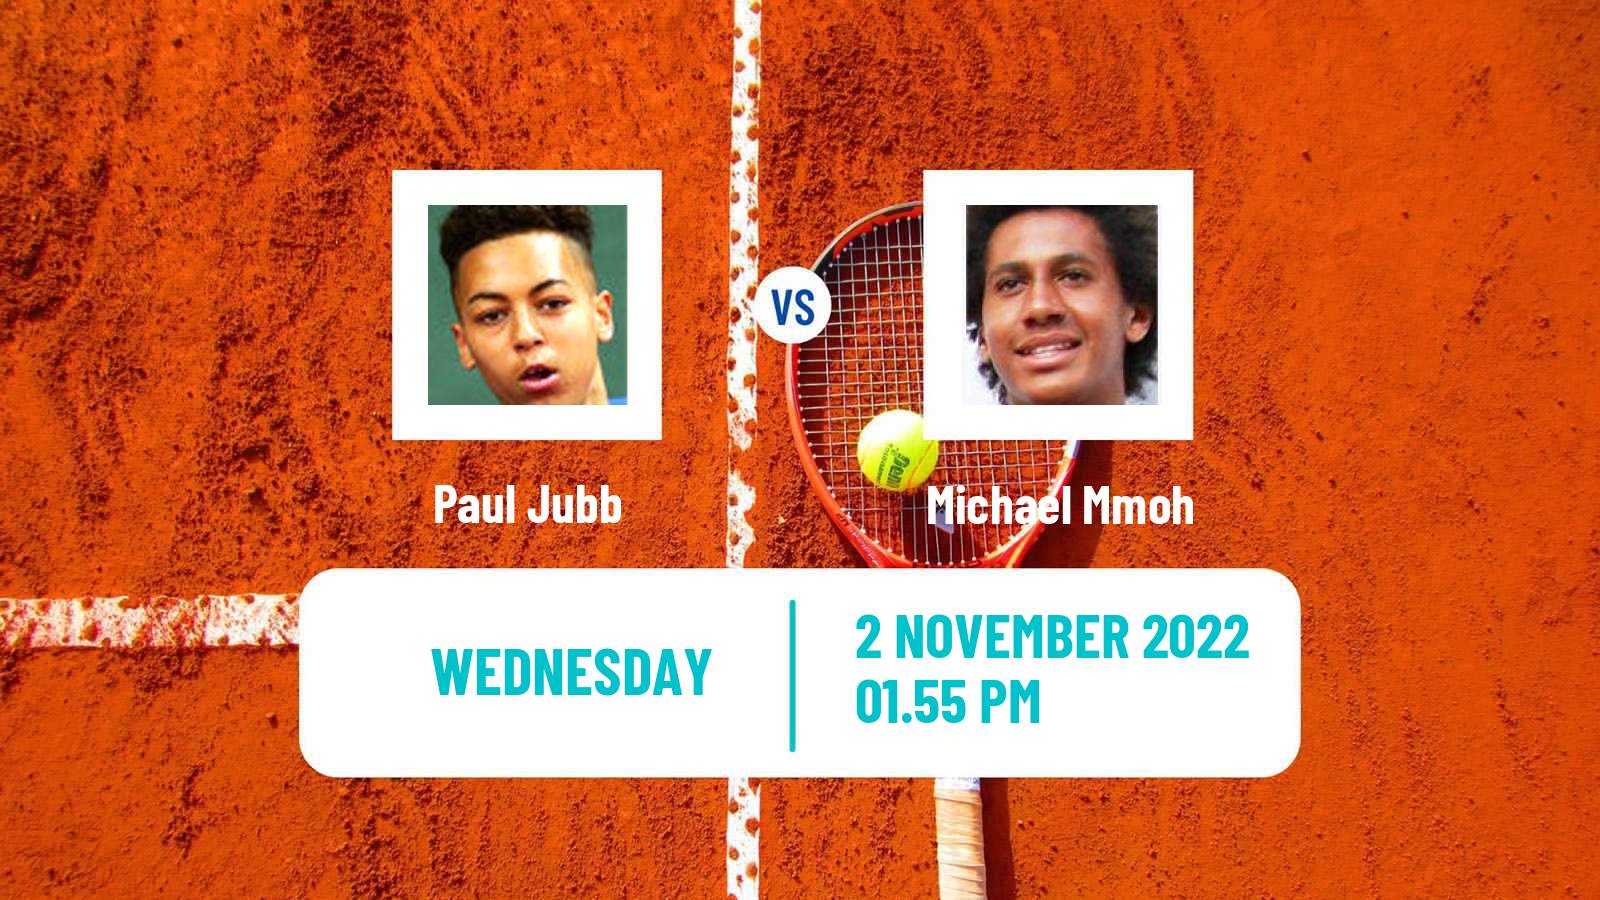 Tennis ATP Challenger Paul Jubb - Michael Mmoh